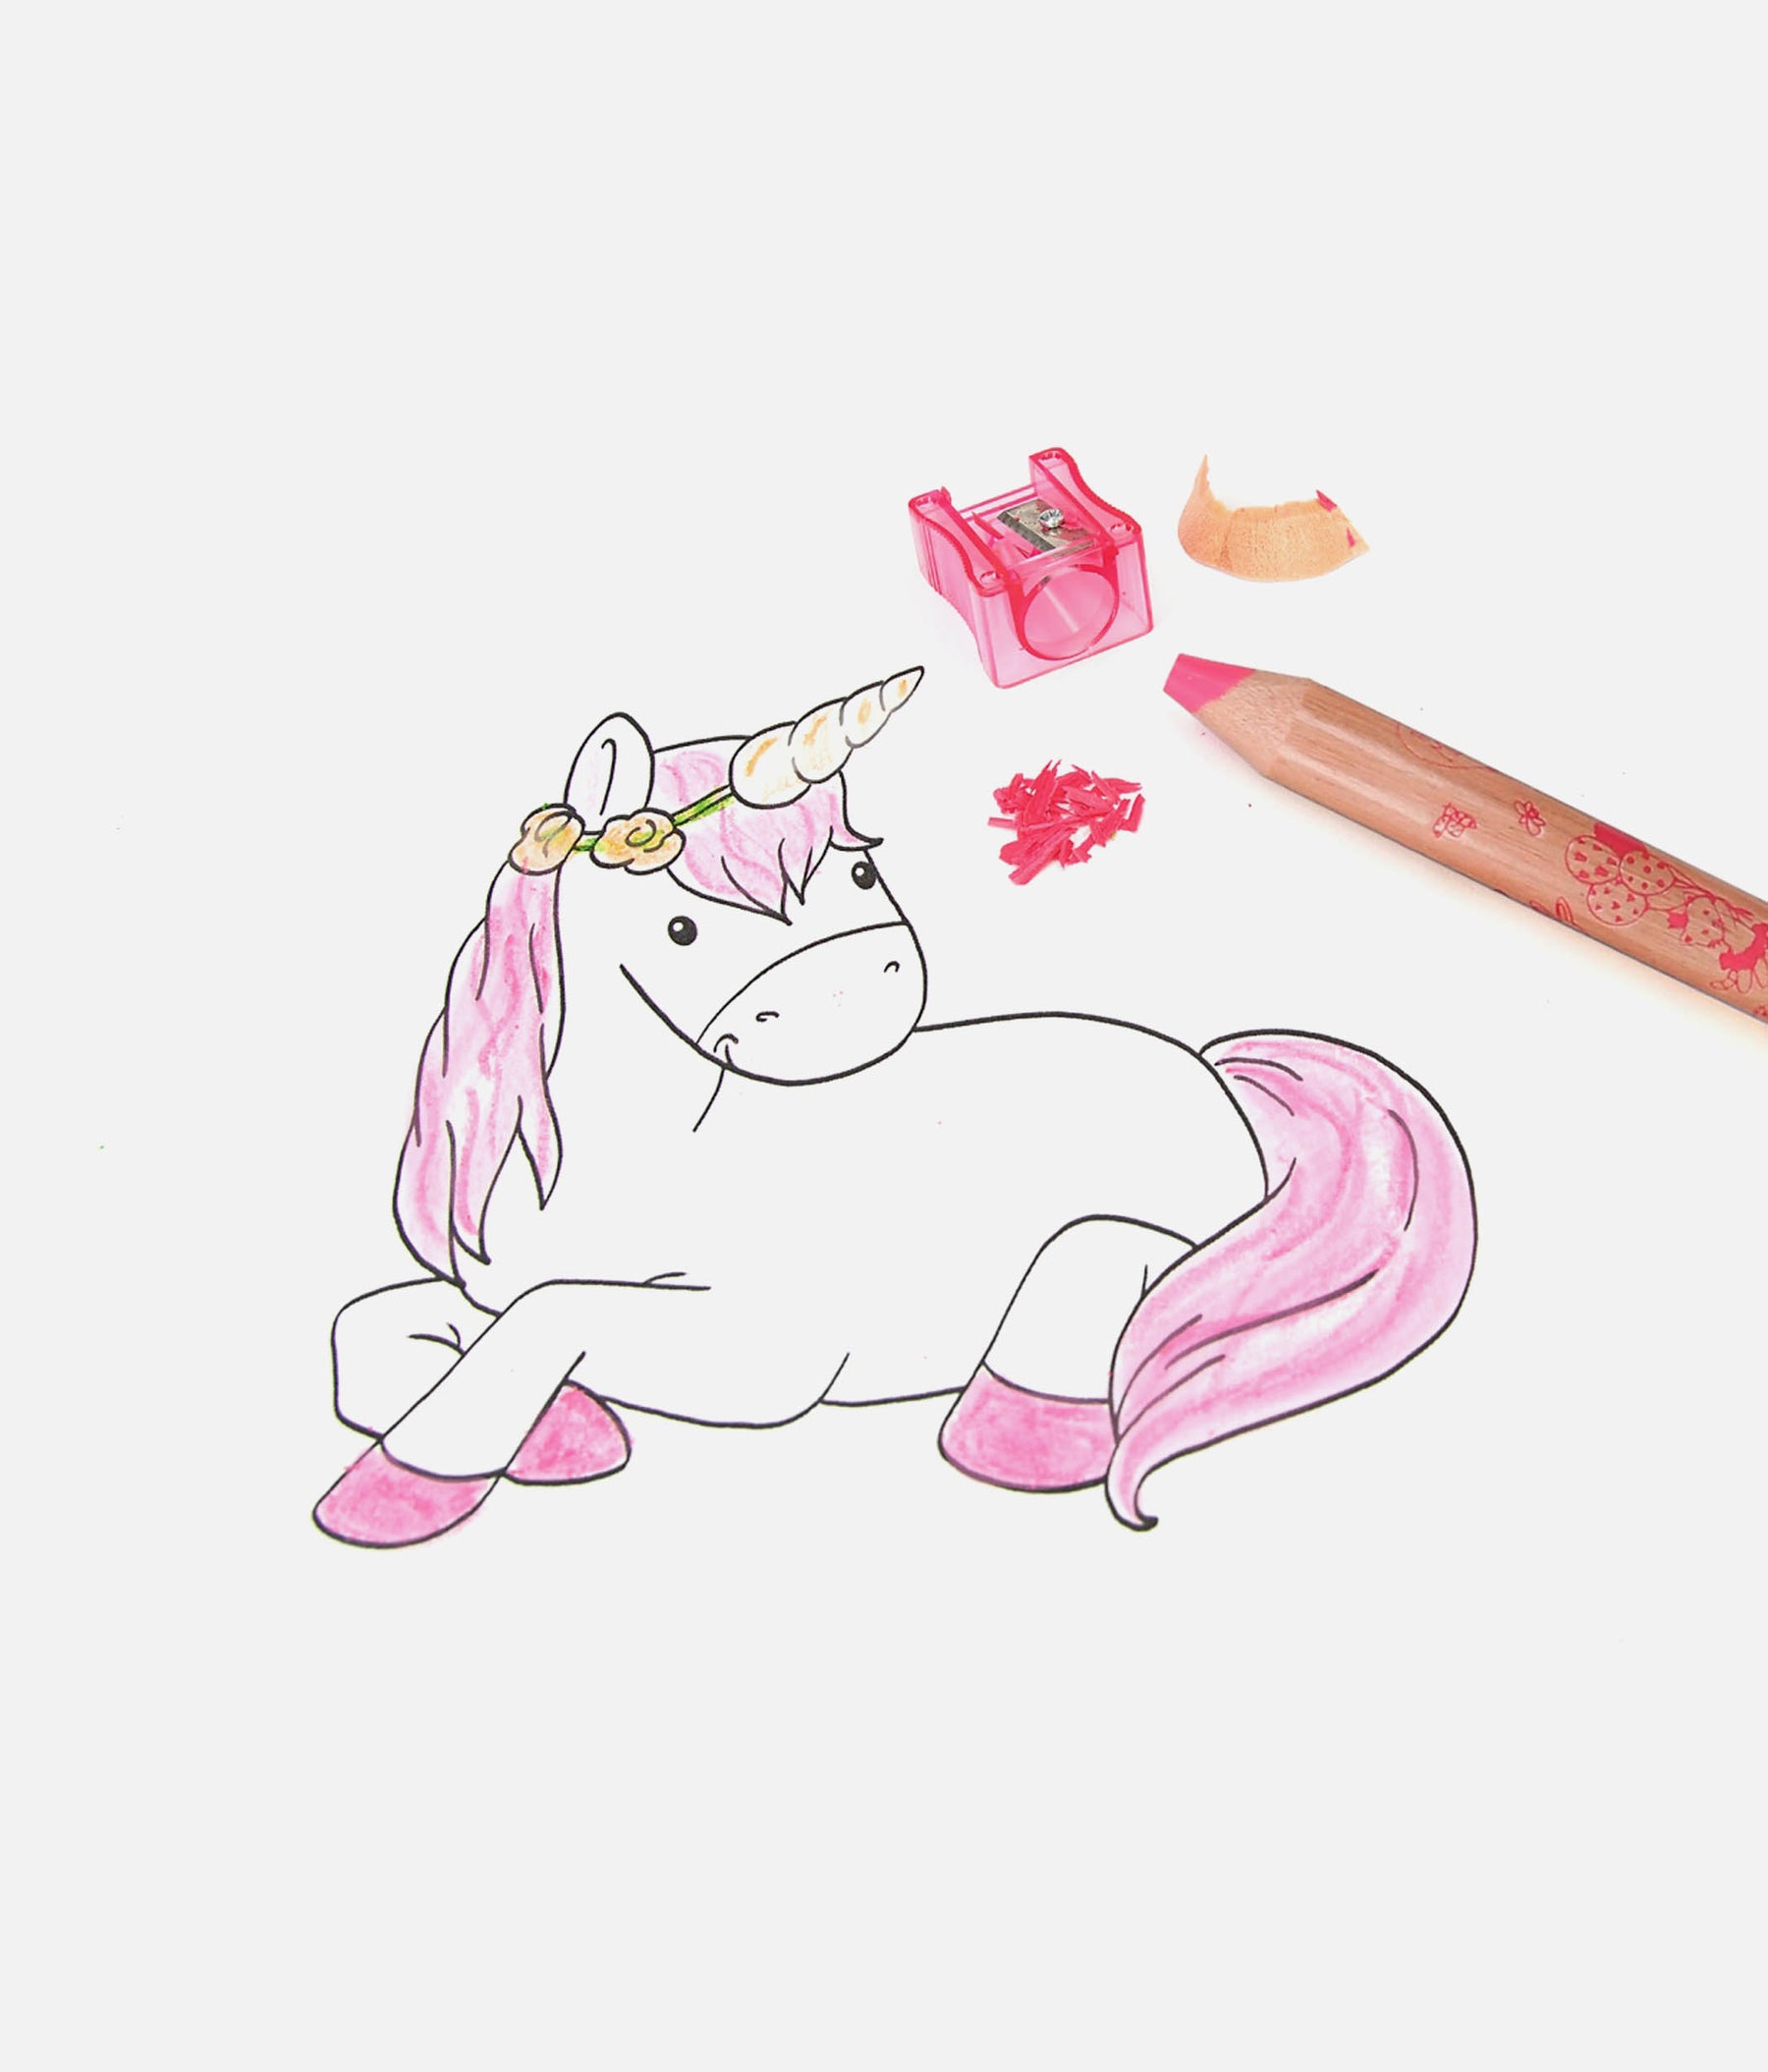 Princess Mimi Colouring Pencils & Sharpener